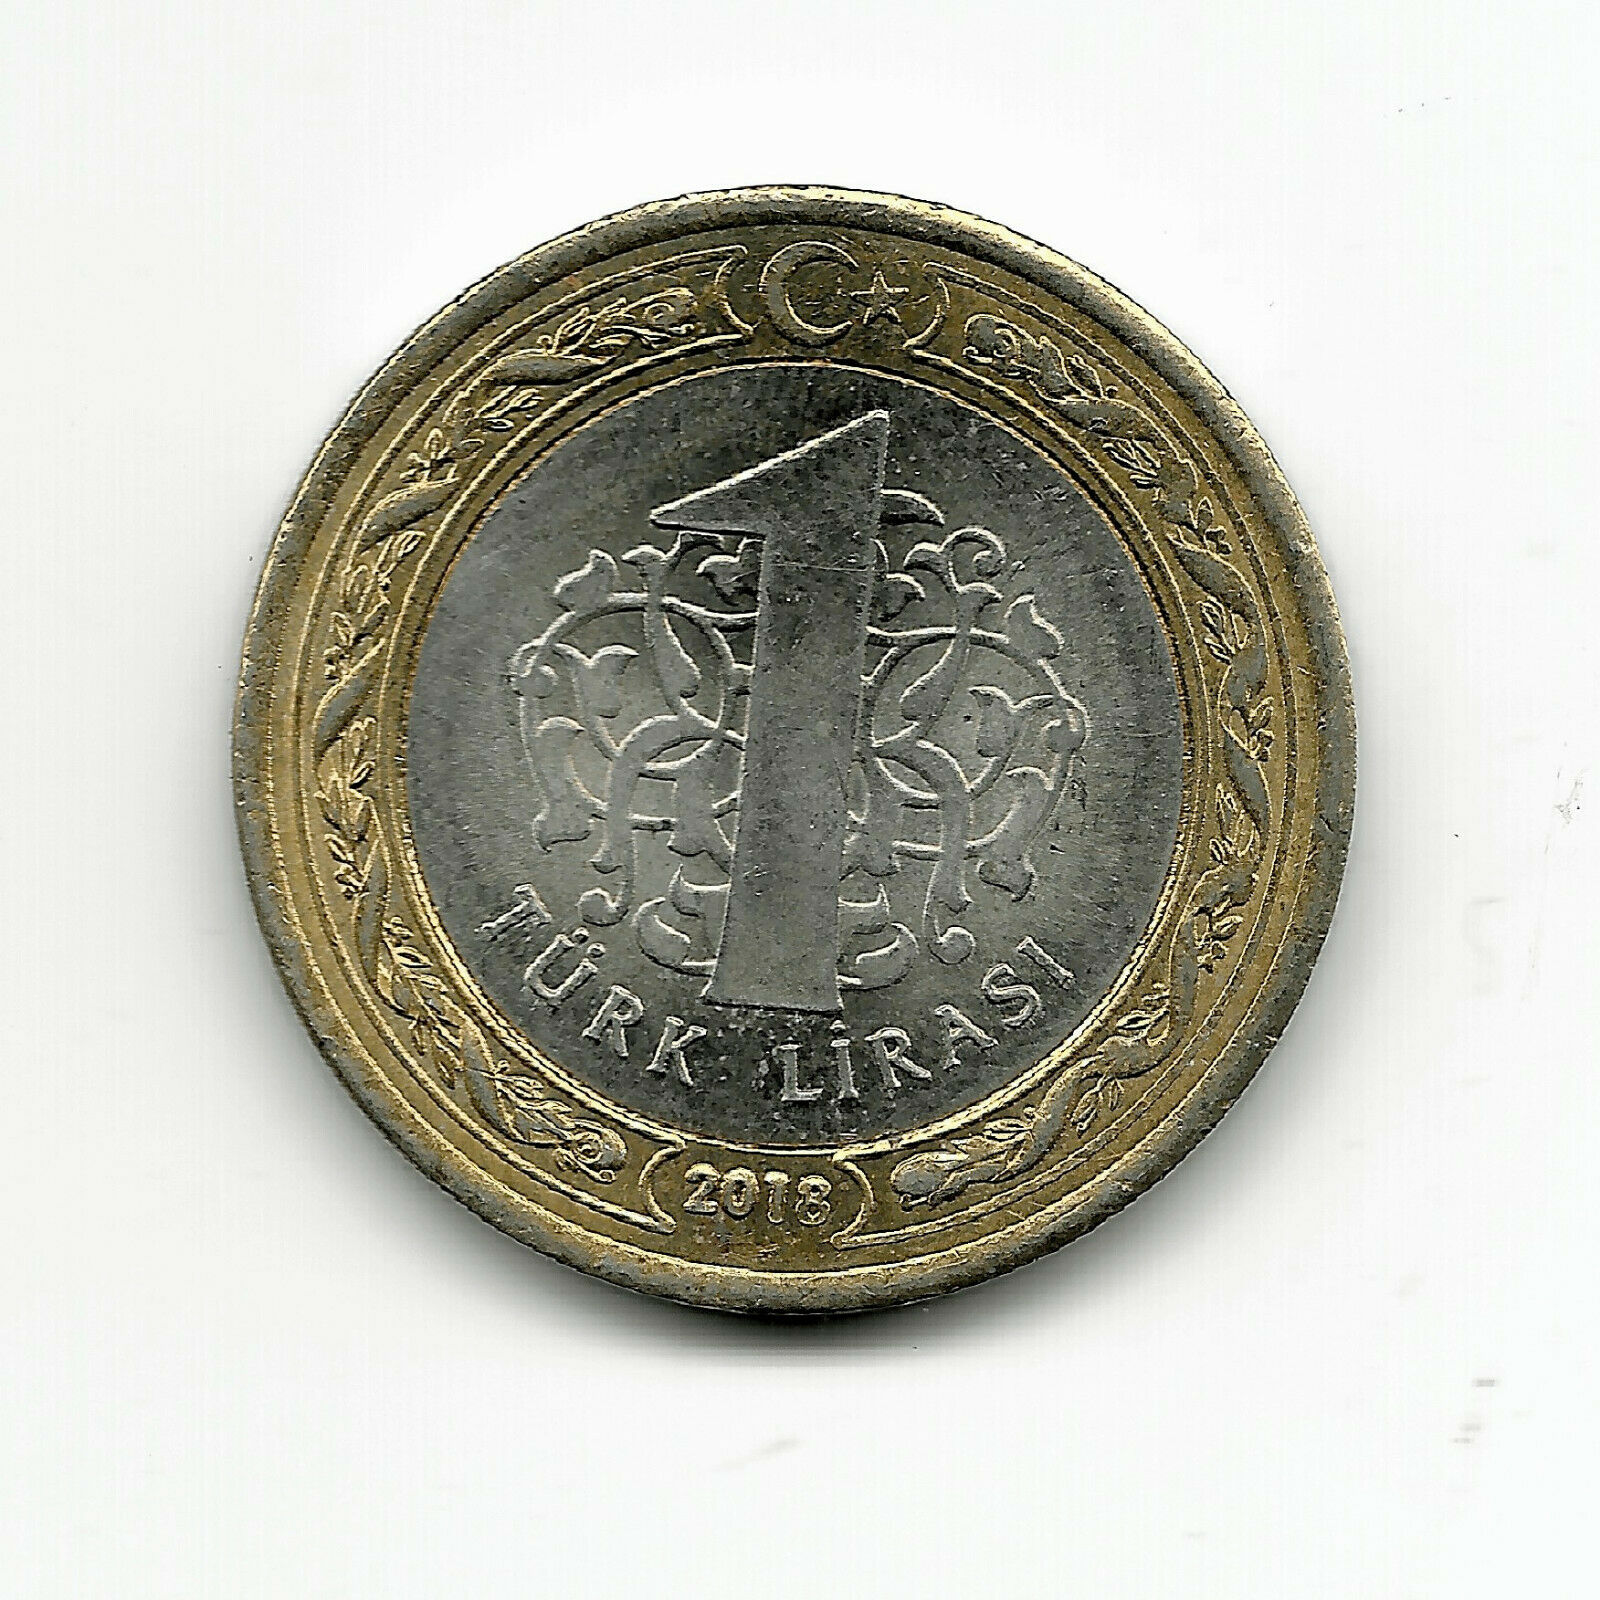 World Coins - Turkey 1 Lira 2018 Bimetallic Coin Km# 1244